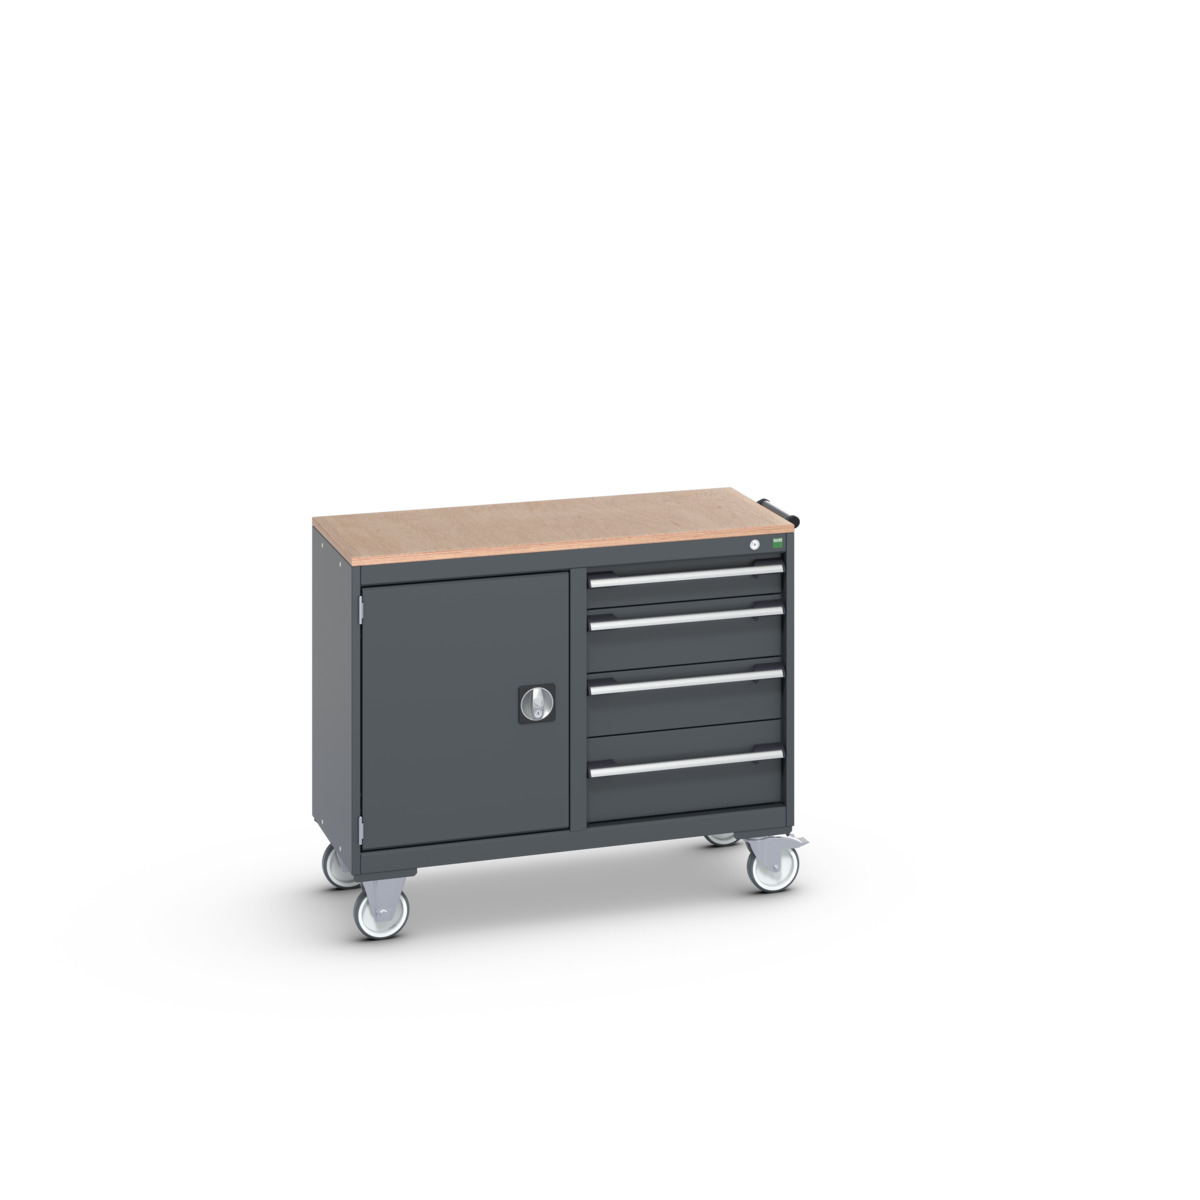 41006004.77V - cubio mobile cabinet 50/50 (mpx)